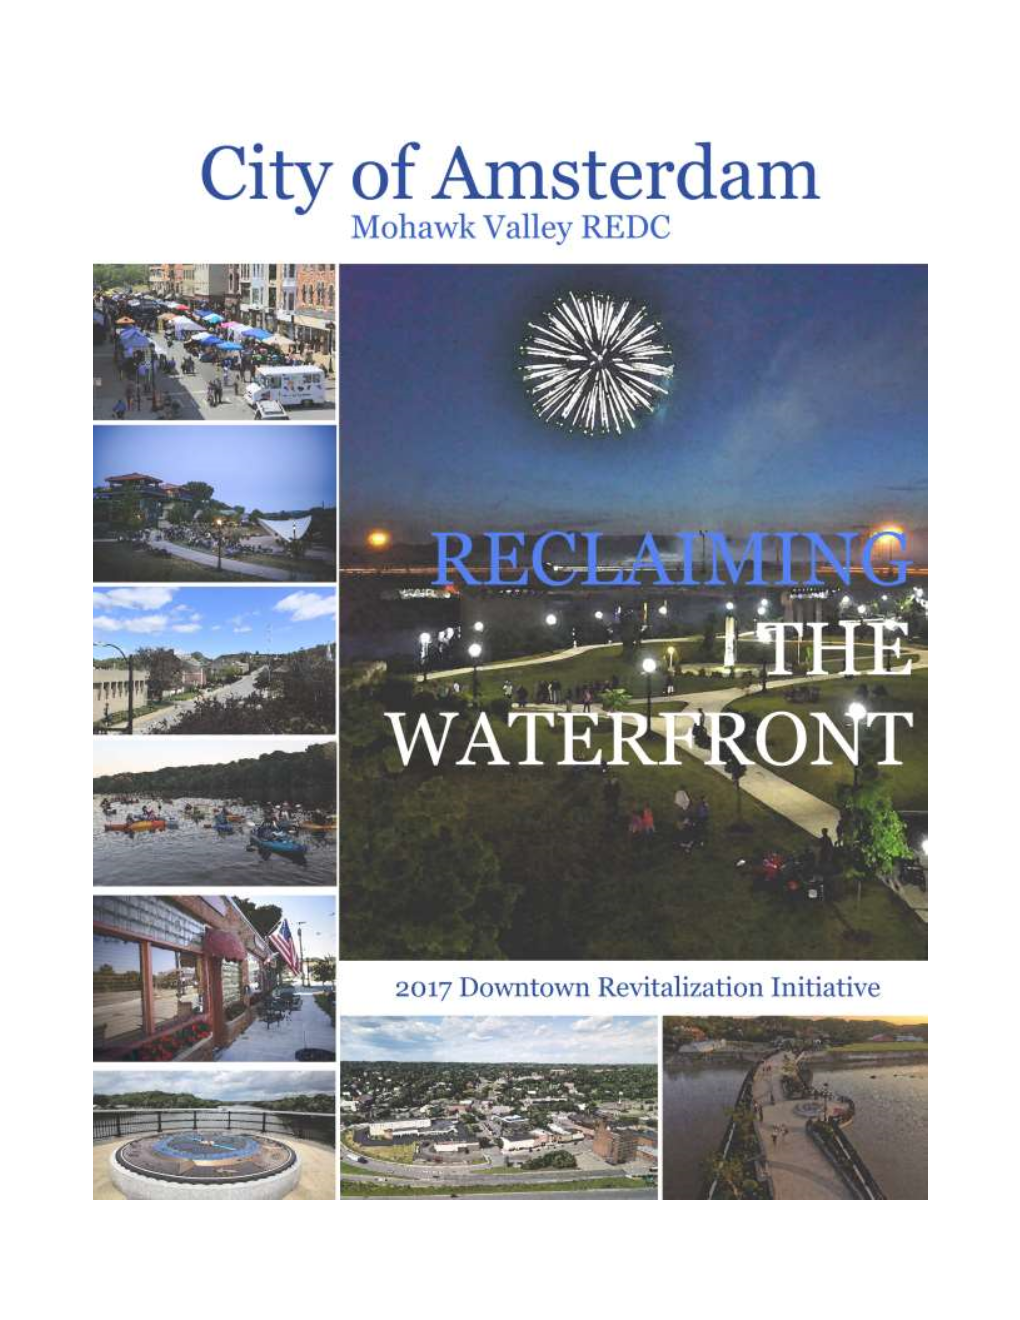 City of Amsterdam Downtown Revitalization Initiative